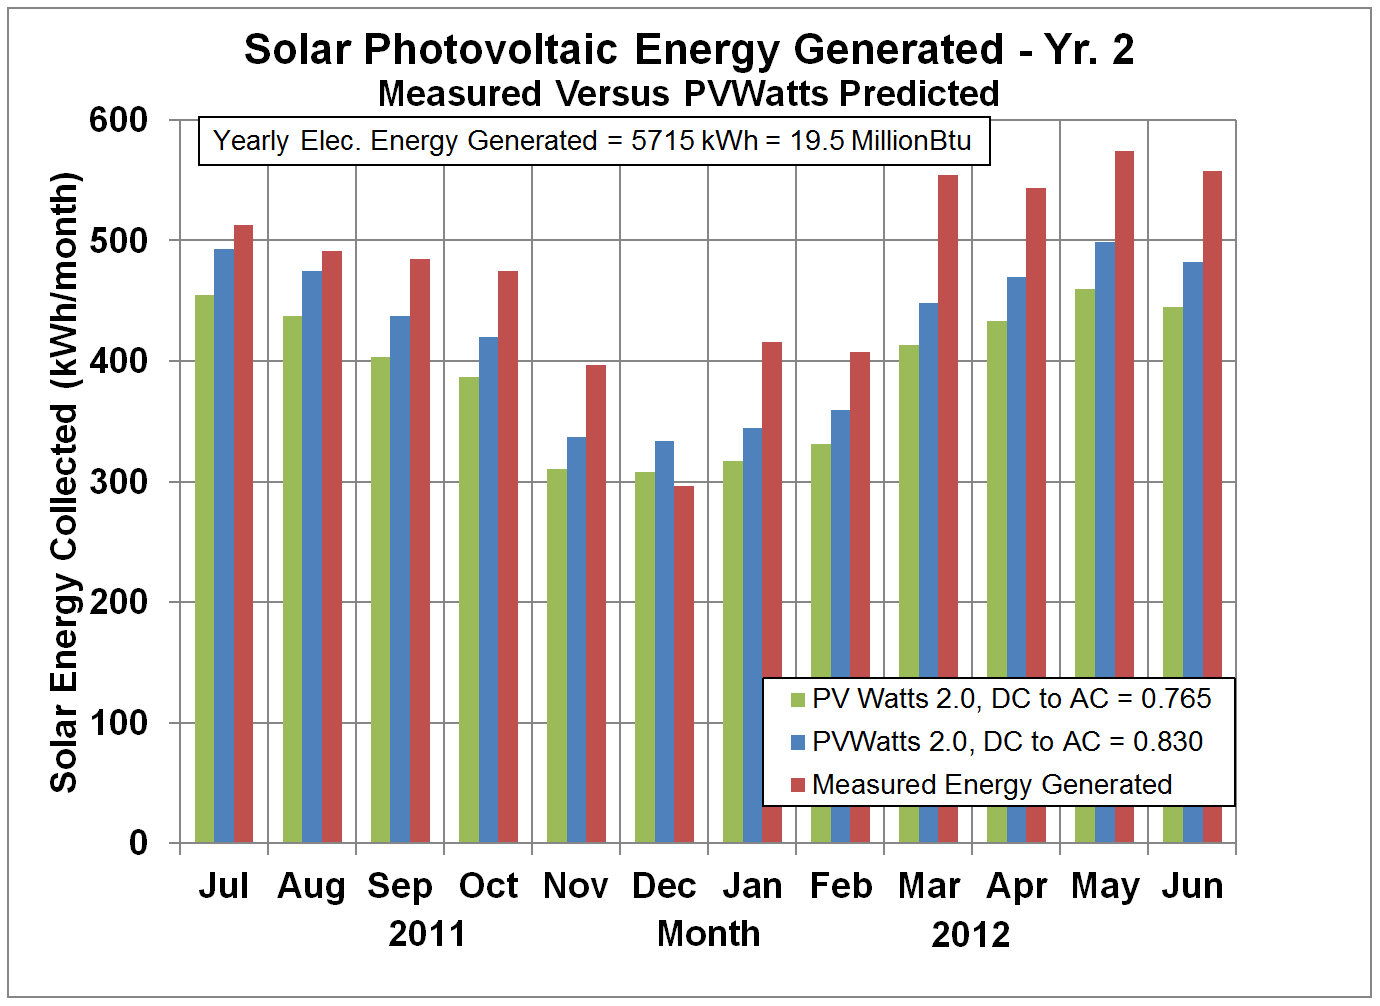 Solar PV Energy Predicted versus Generated - Yr. 2